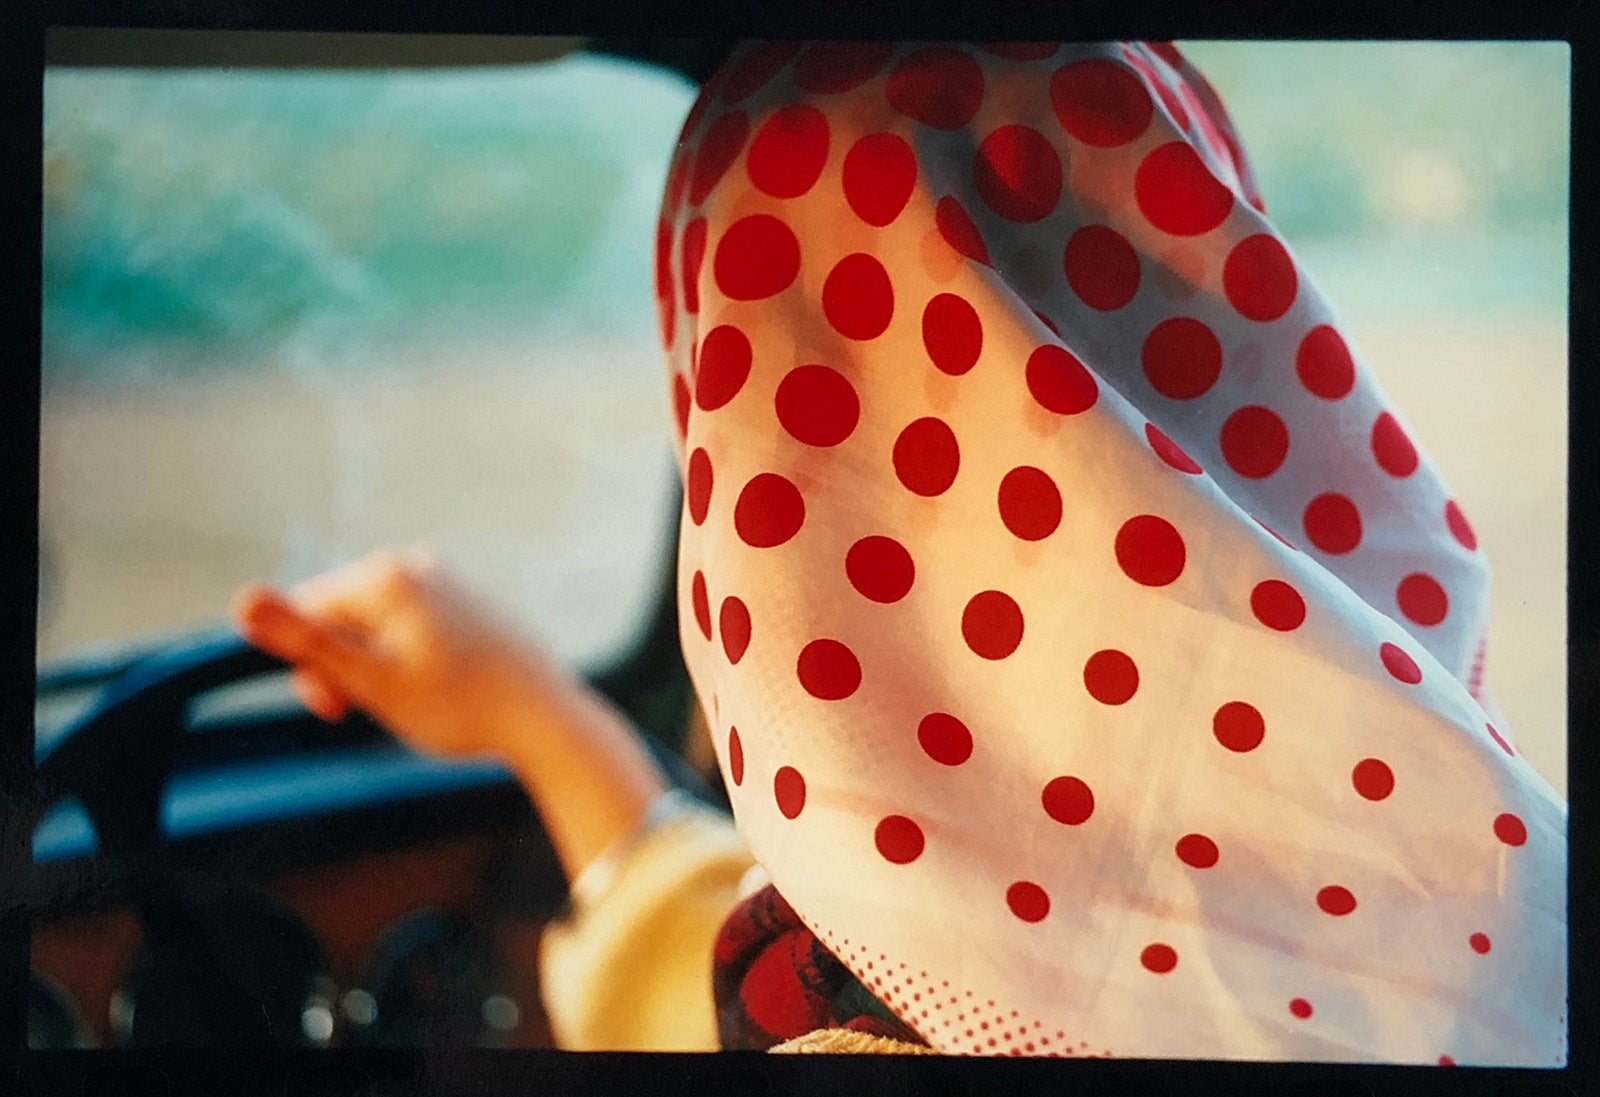 Richard Heeps photograph of a woman driving a car wearing a vintage polka dot headscarf.